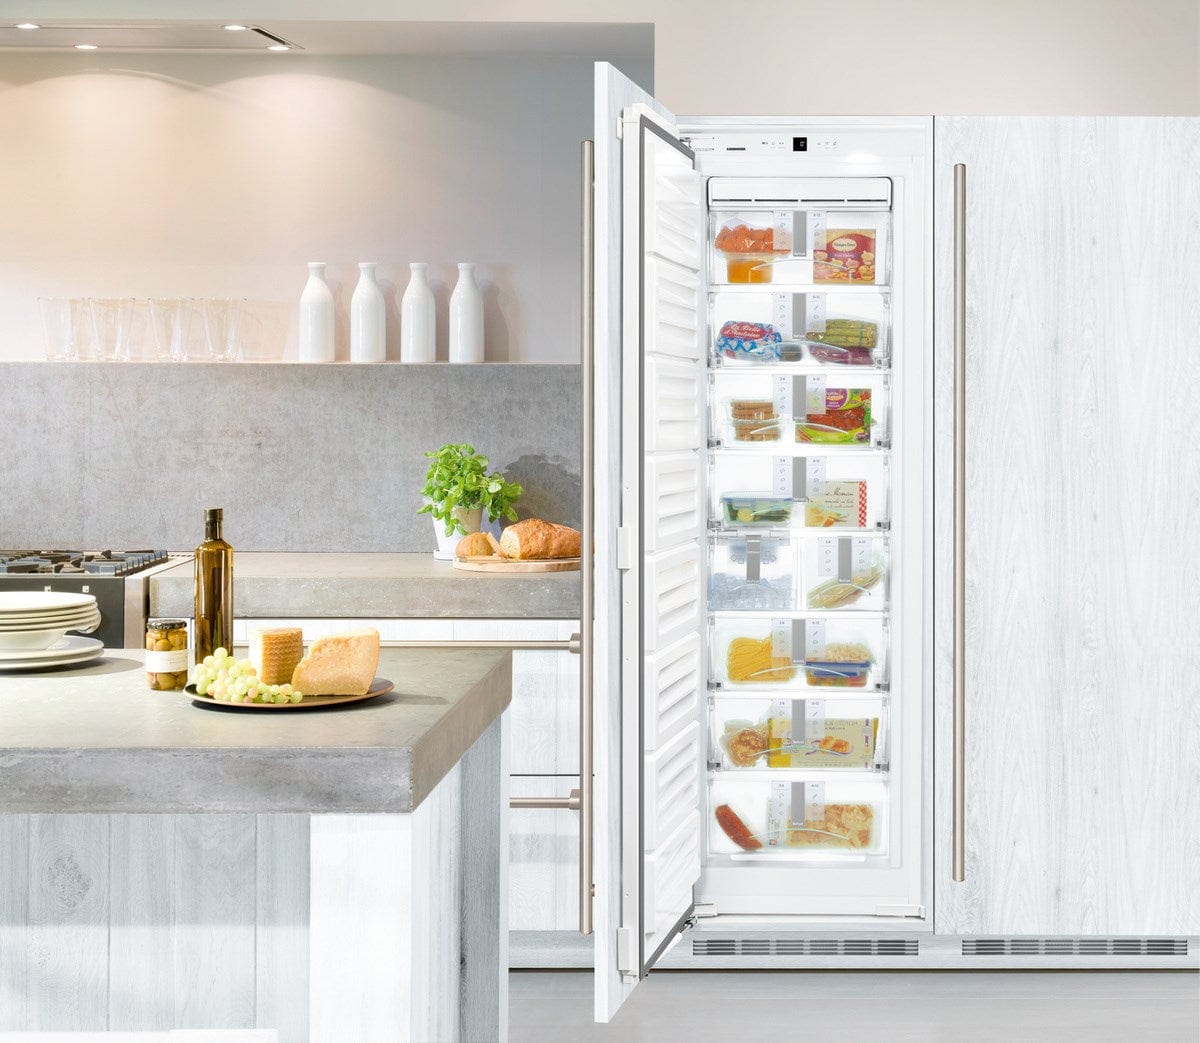 Liebherr 24" HF 861 Fully Integrated All-Freezer Freezers HF 861 Luxury Appliances Direct